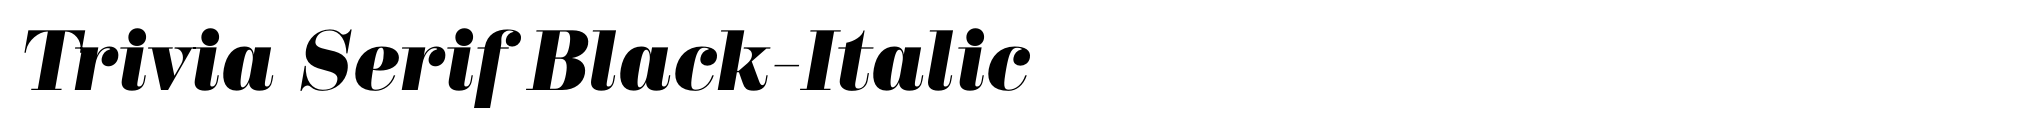 Trivia Serif Black-Italic image